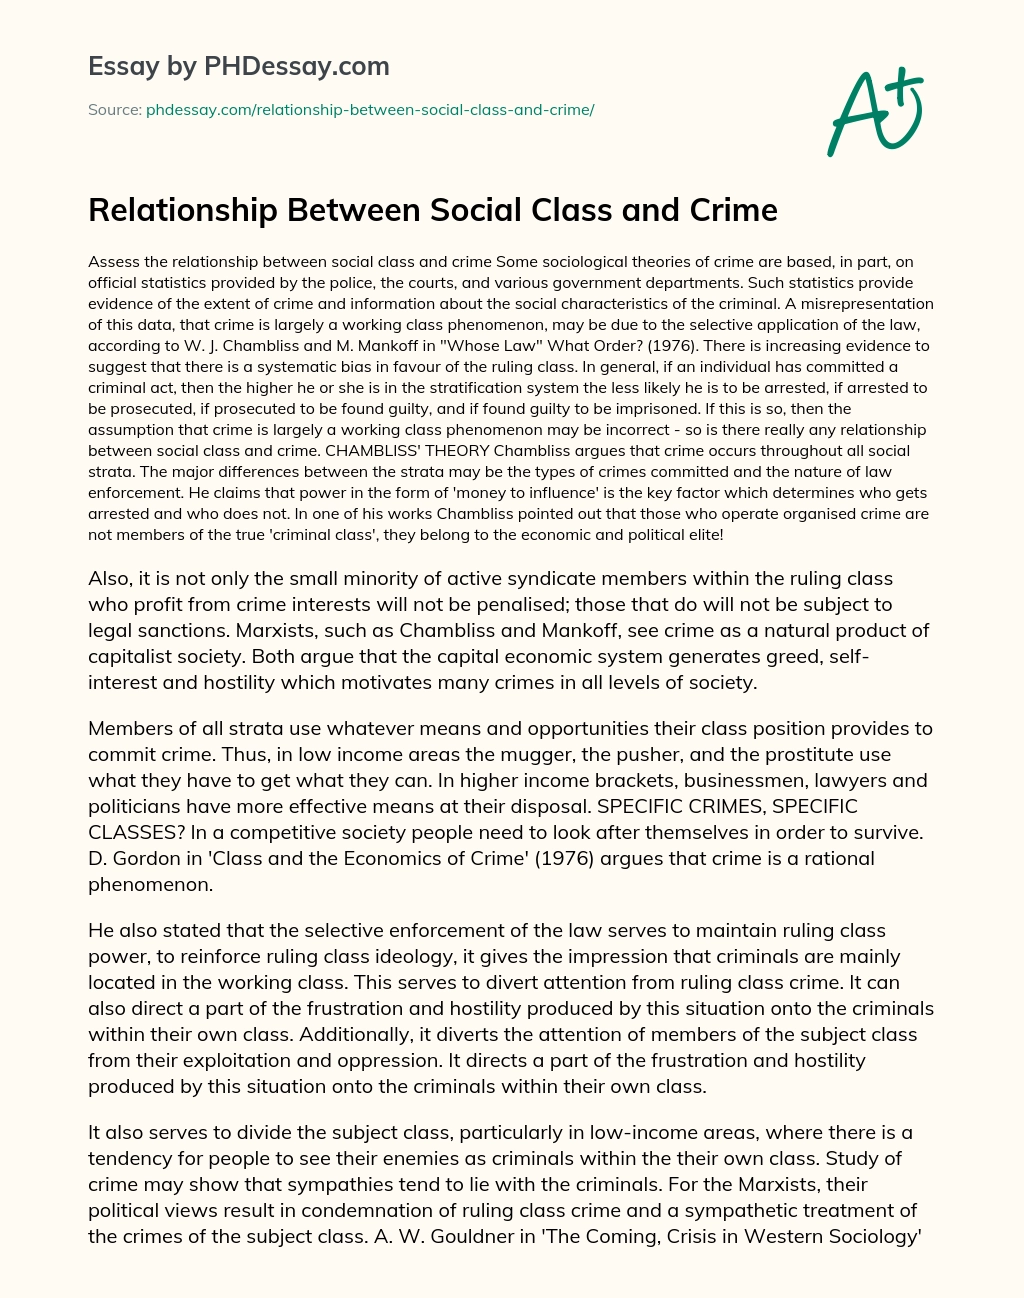 Relationship Between Social Class and Crime essay